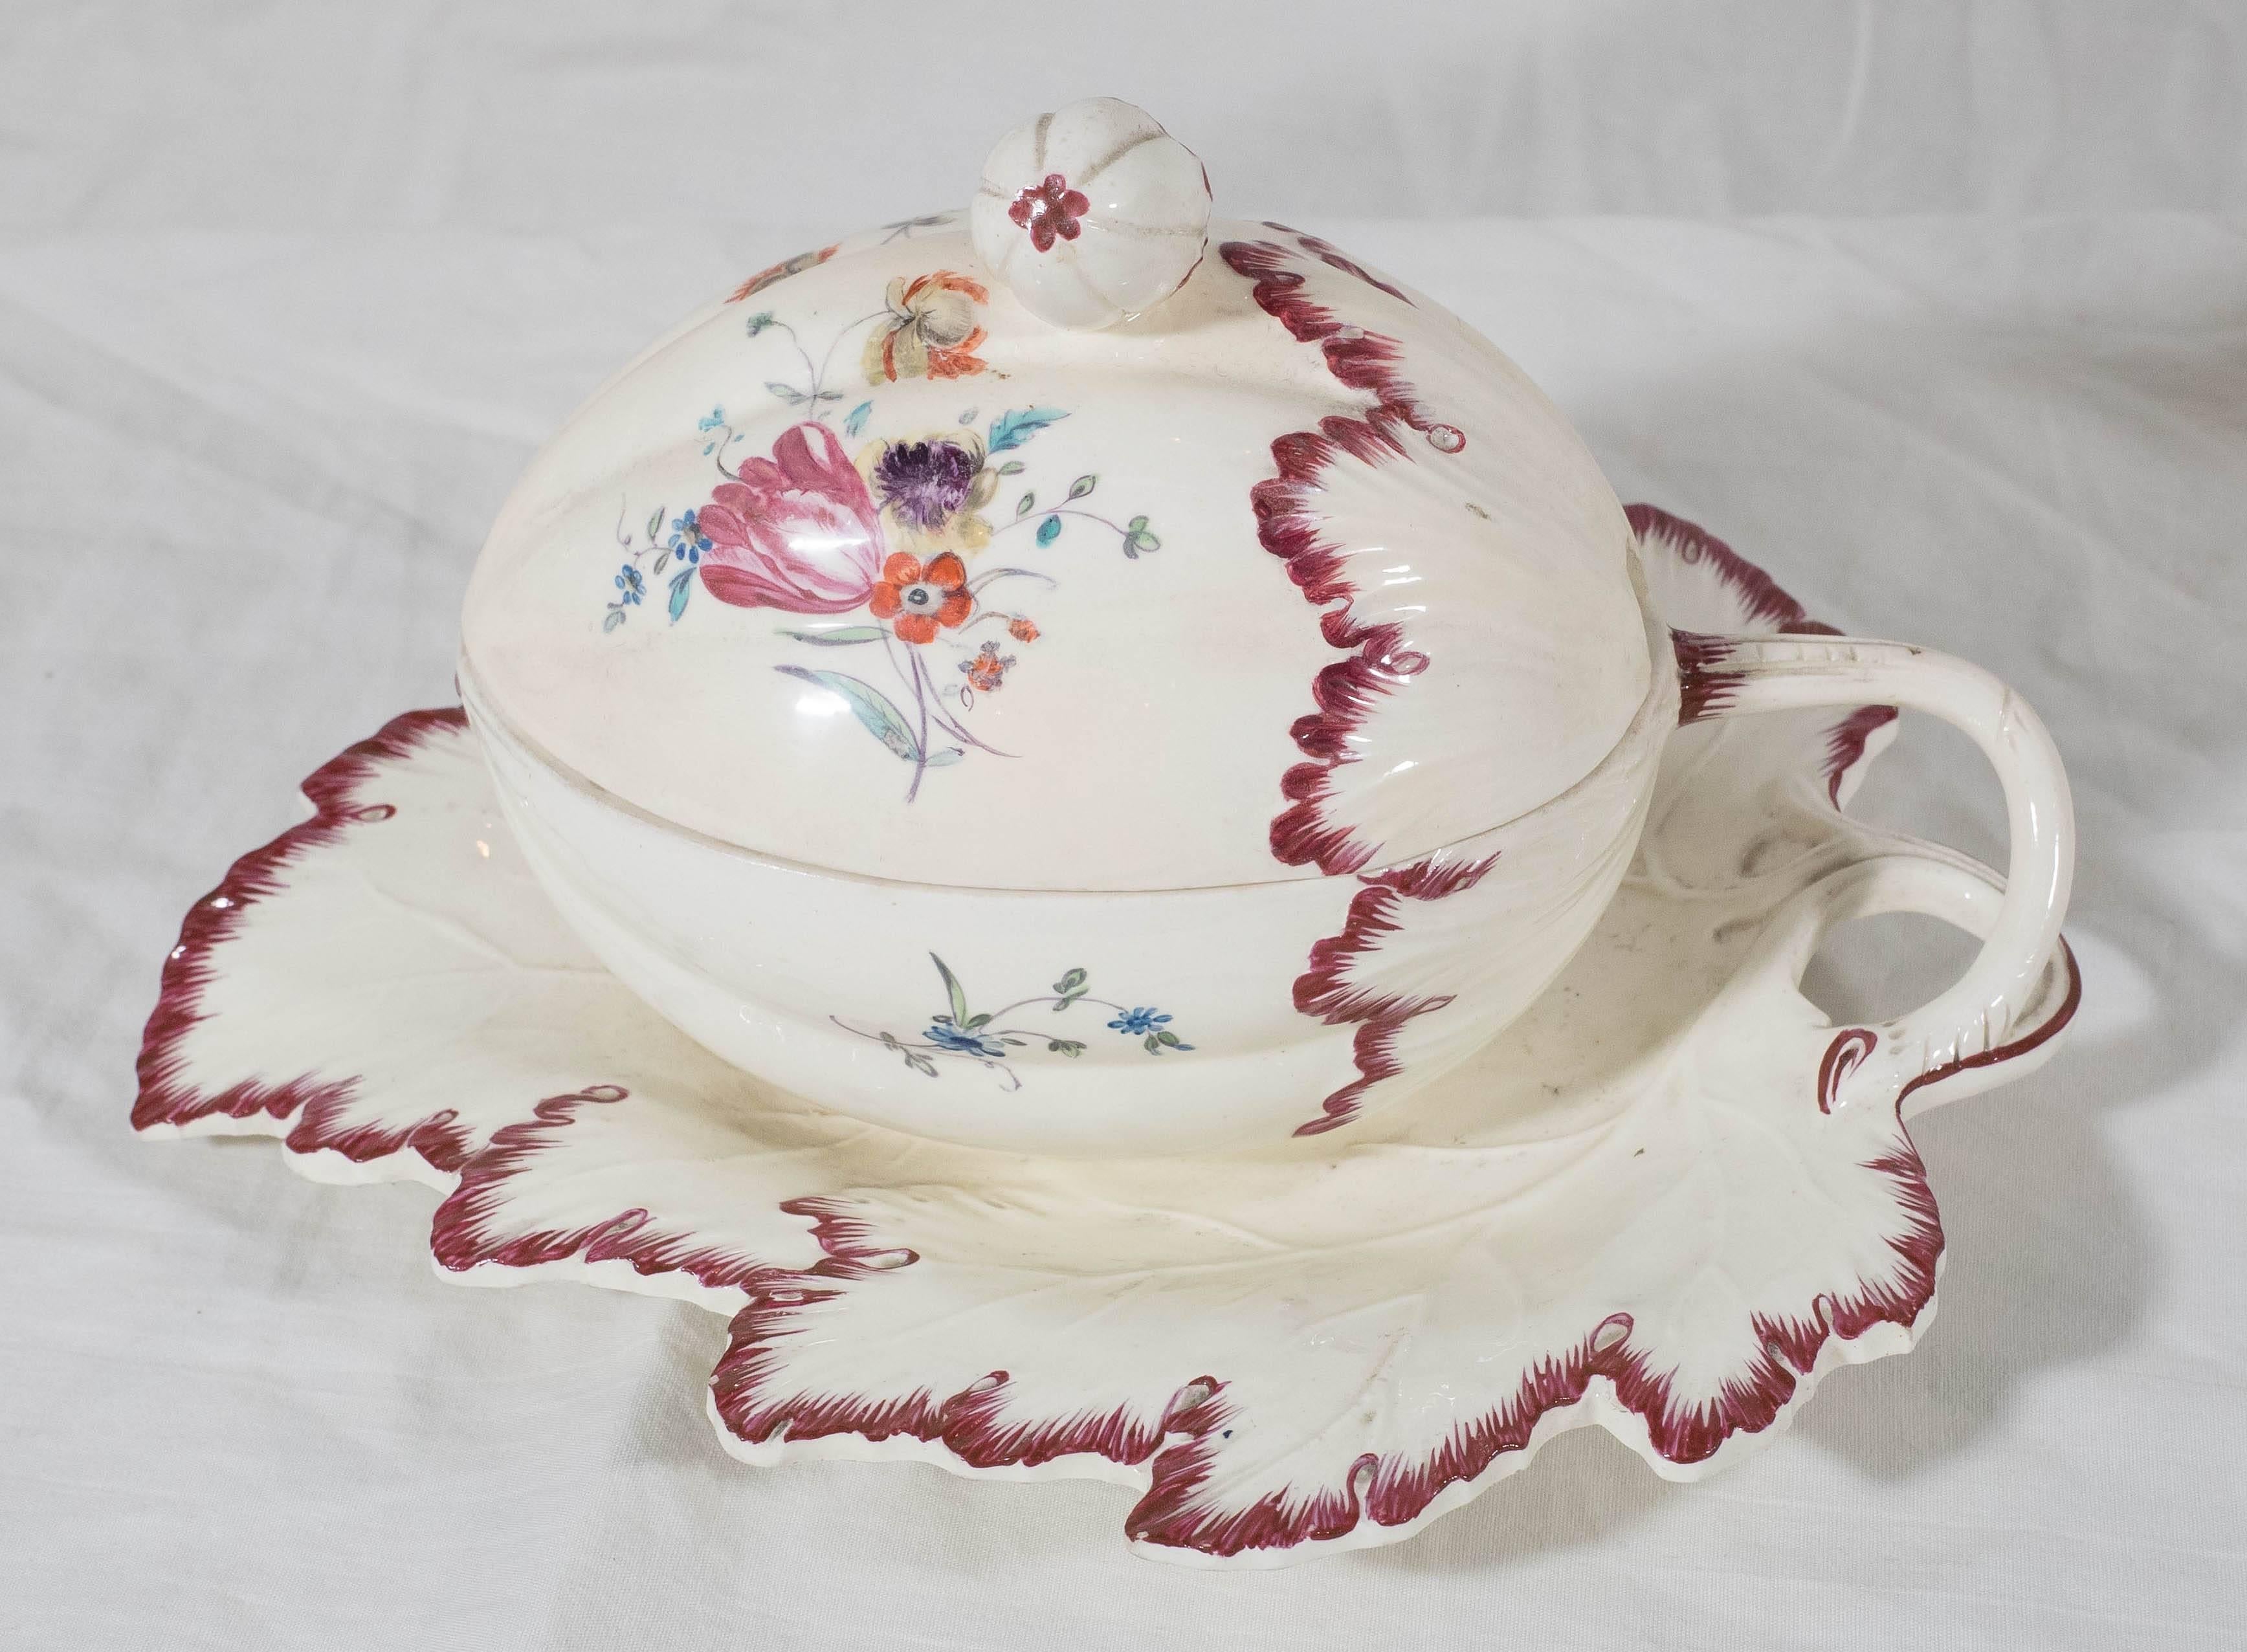 Antique Creamware Dishes 18th Century Dessert Service 3